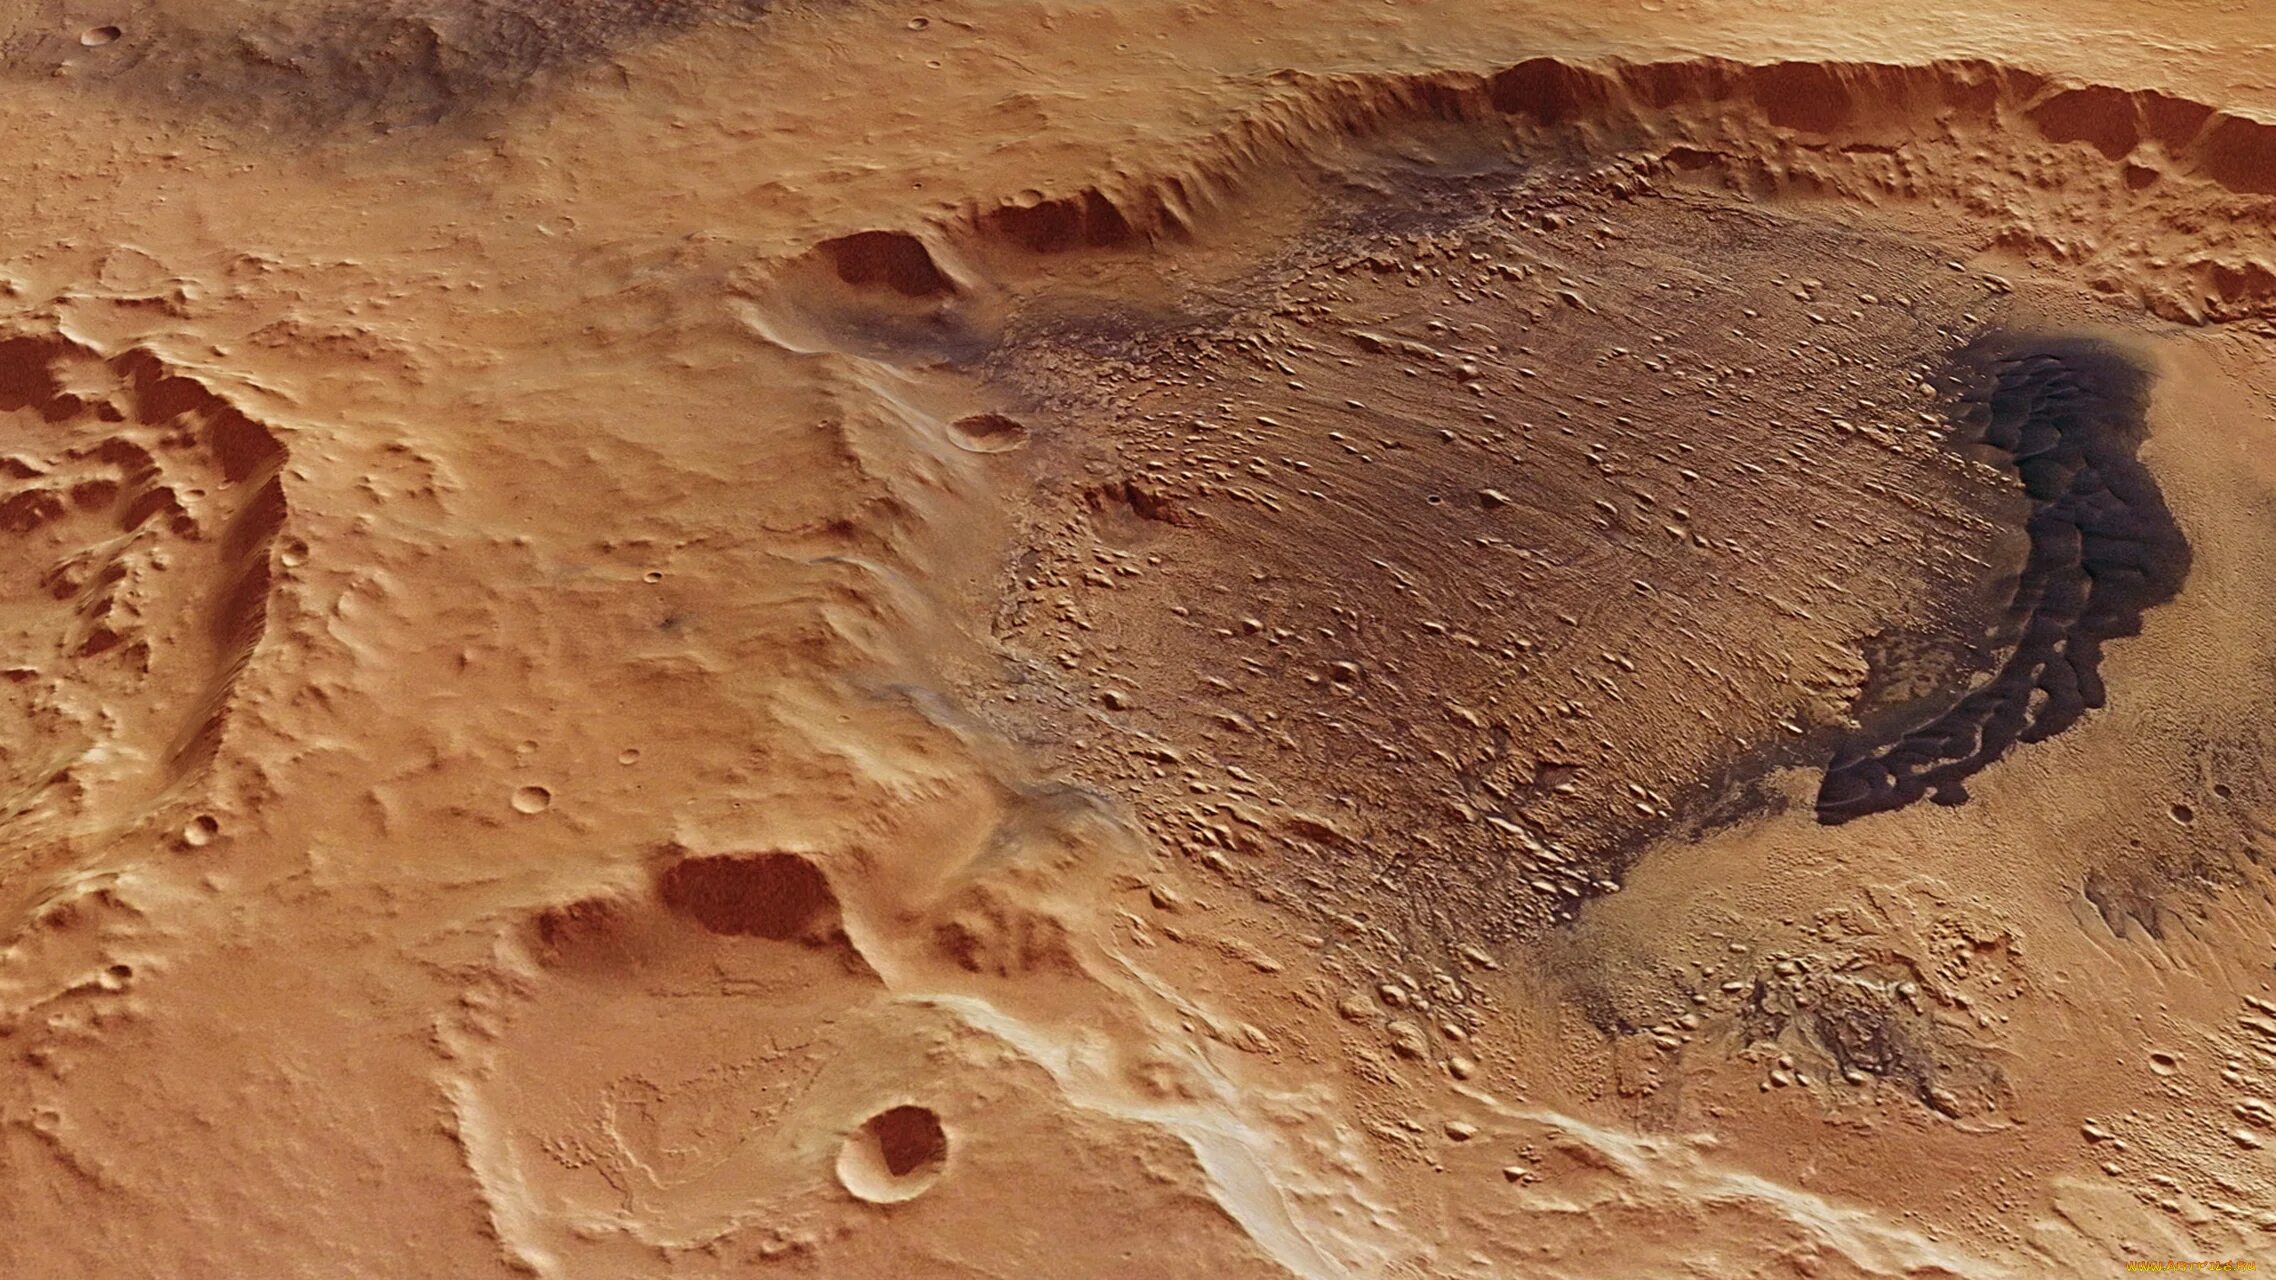 Вода на поверхности марса. Марс, Планета кратеры. Марс поверхность планеты. Поверхность и рельеф планеты Марс. Кратеры на Марсе.